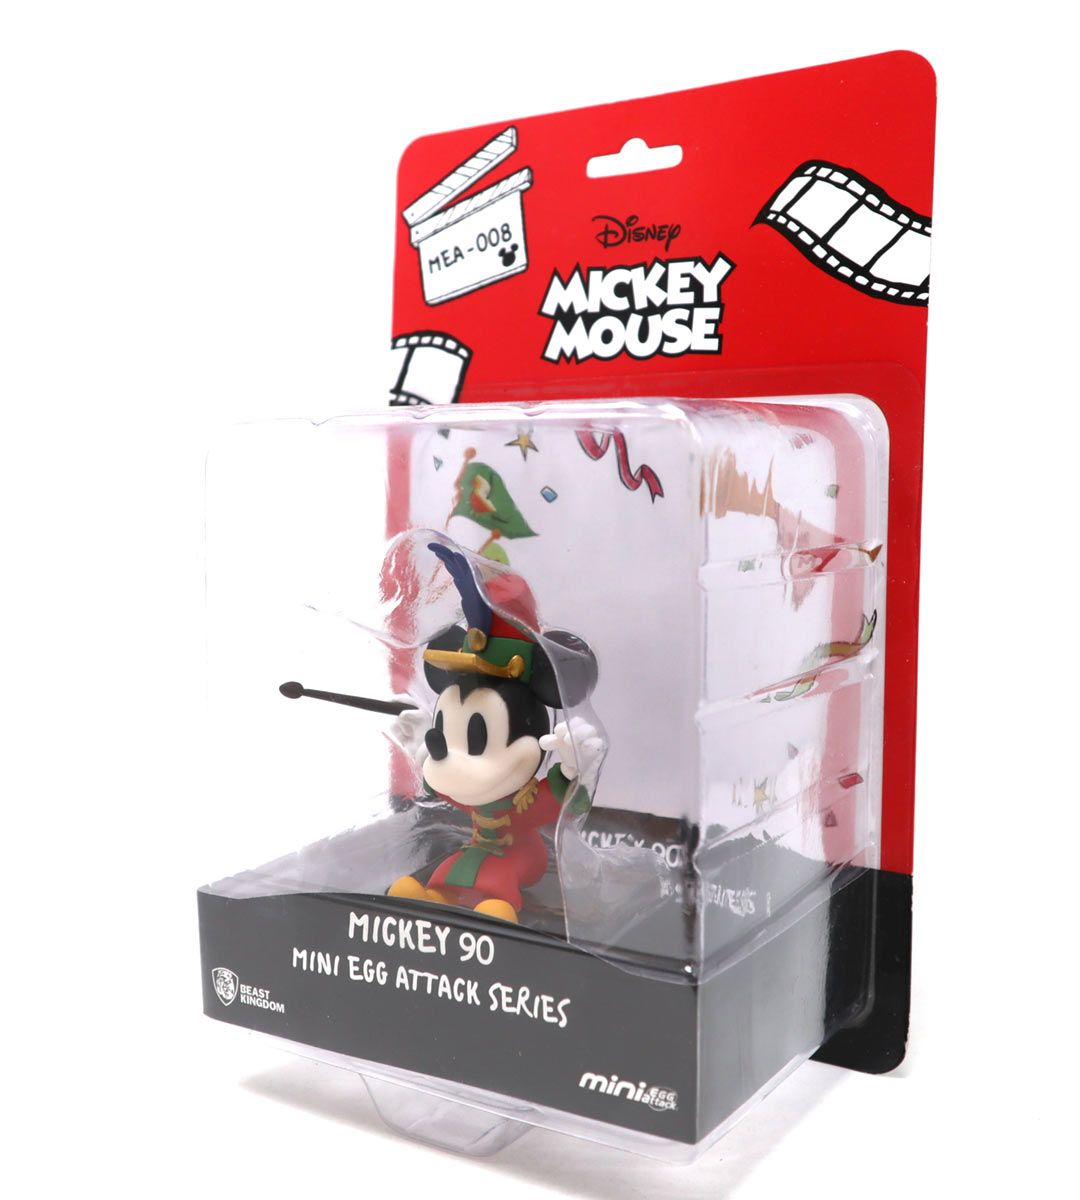 Serie de ataque de mini huevo: conductor de Mickey 90 (Mickey Mouse)